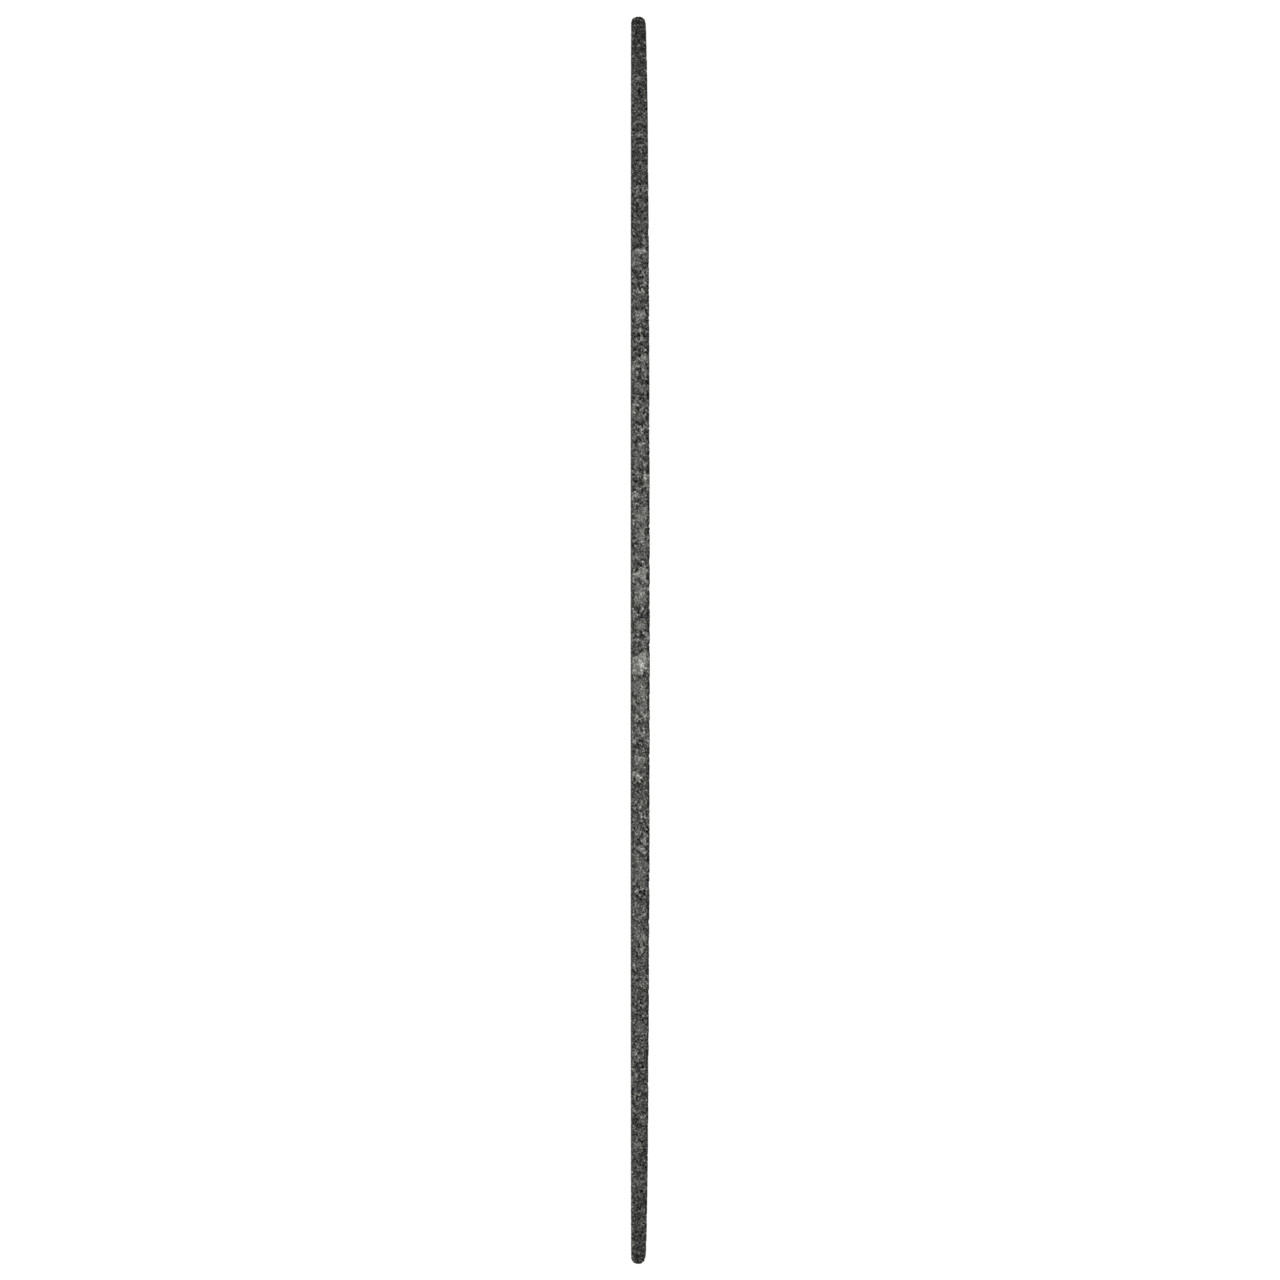 Dischi da taglio Tyrolit DxDxH 50x1x6 Per acciaio inox, forma: 41 - versione diritta, Art. 323976